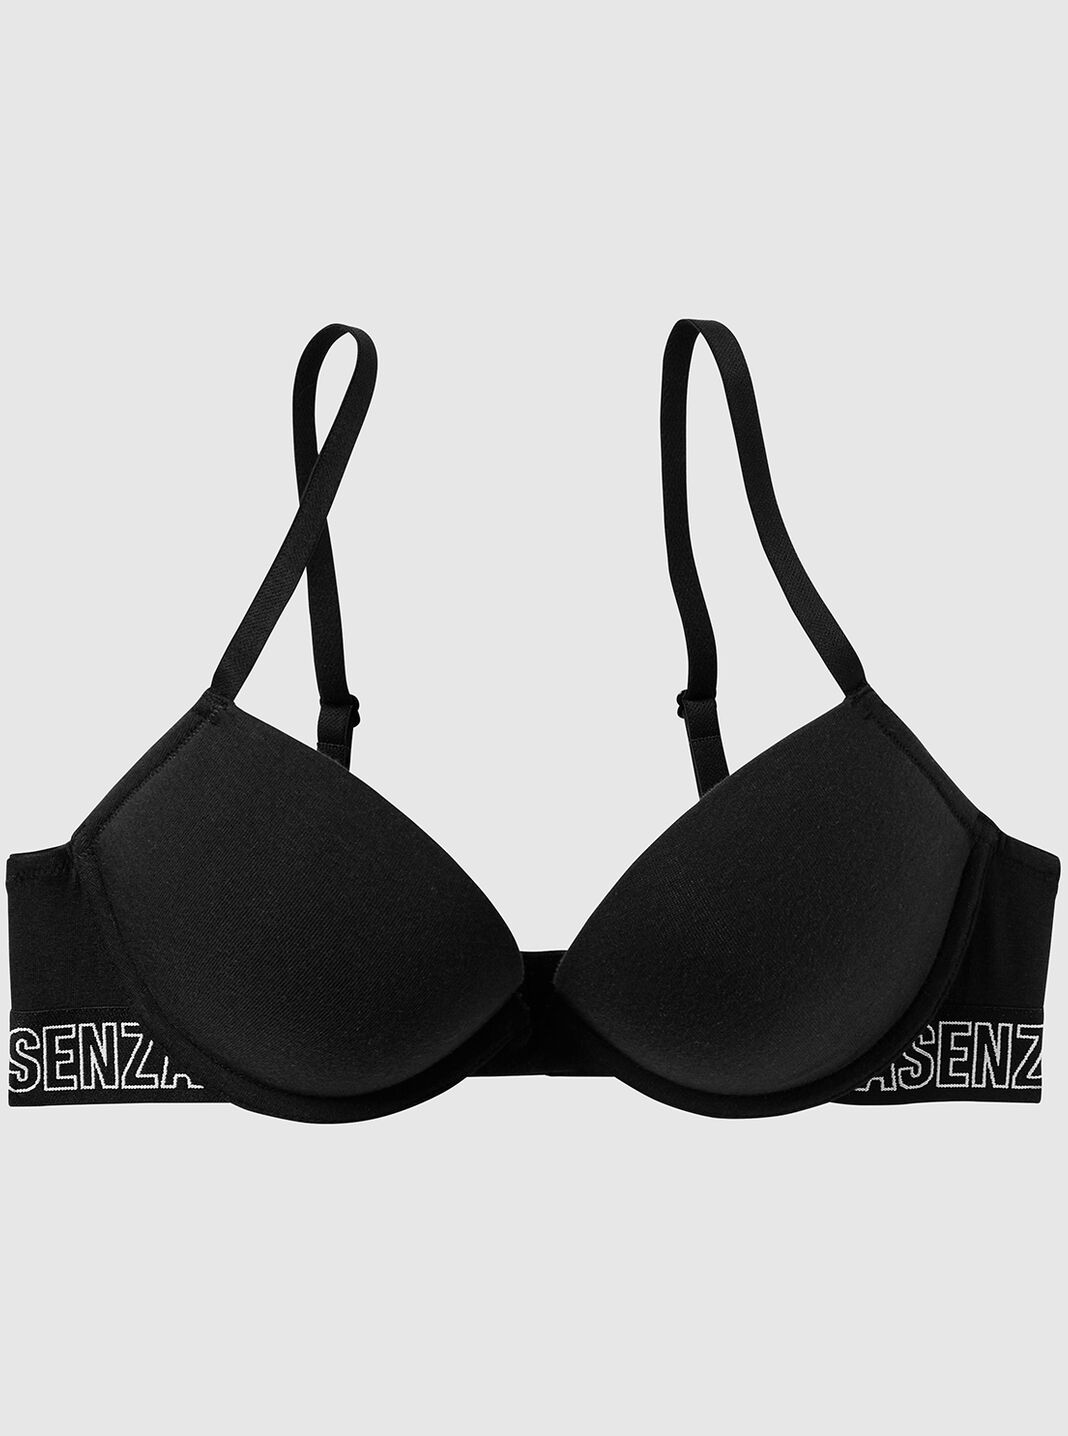 LA SENZA ORIGINAL 60 RIBUAN on Instagram: Victoria's Secret Wireless Bra  Set Panty Size: 36B, 36C, 38B, 38C Price: 360.000/set bra+panty (Di web 1,5  juta per set)